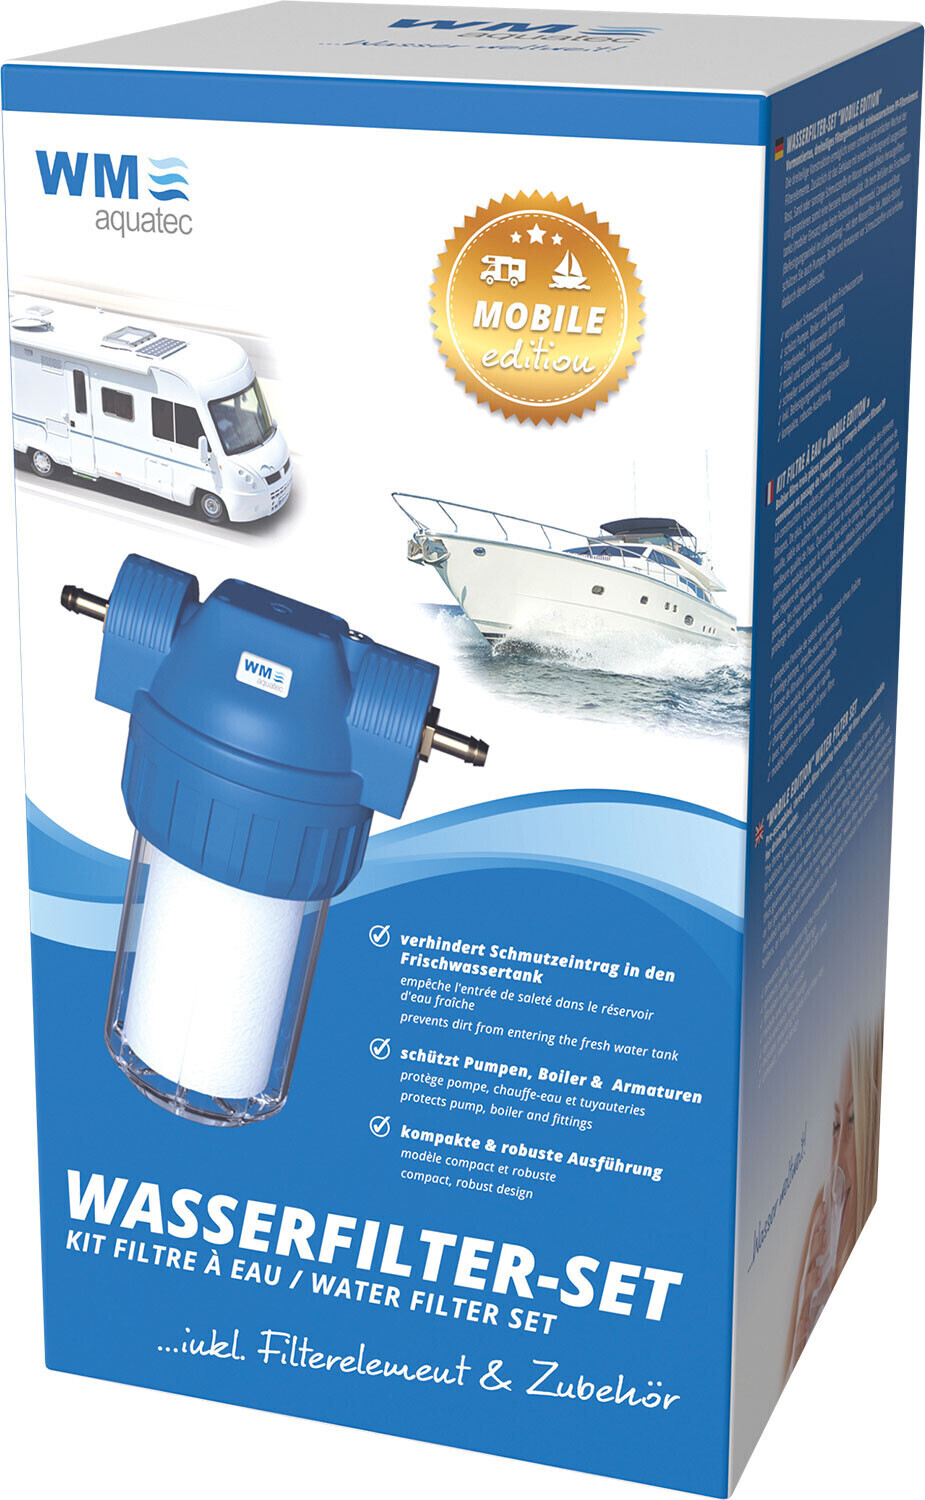 WM aquatec Wasserfilter-Set Mobile Edition ab € 39,99